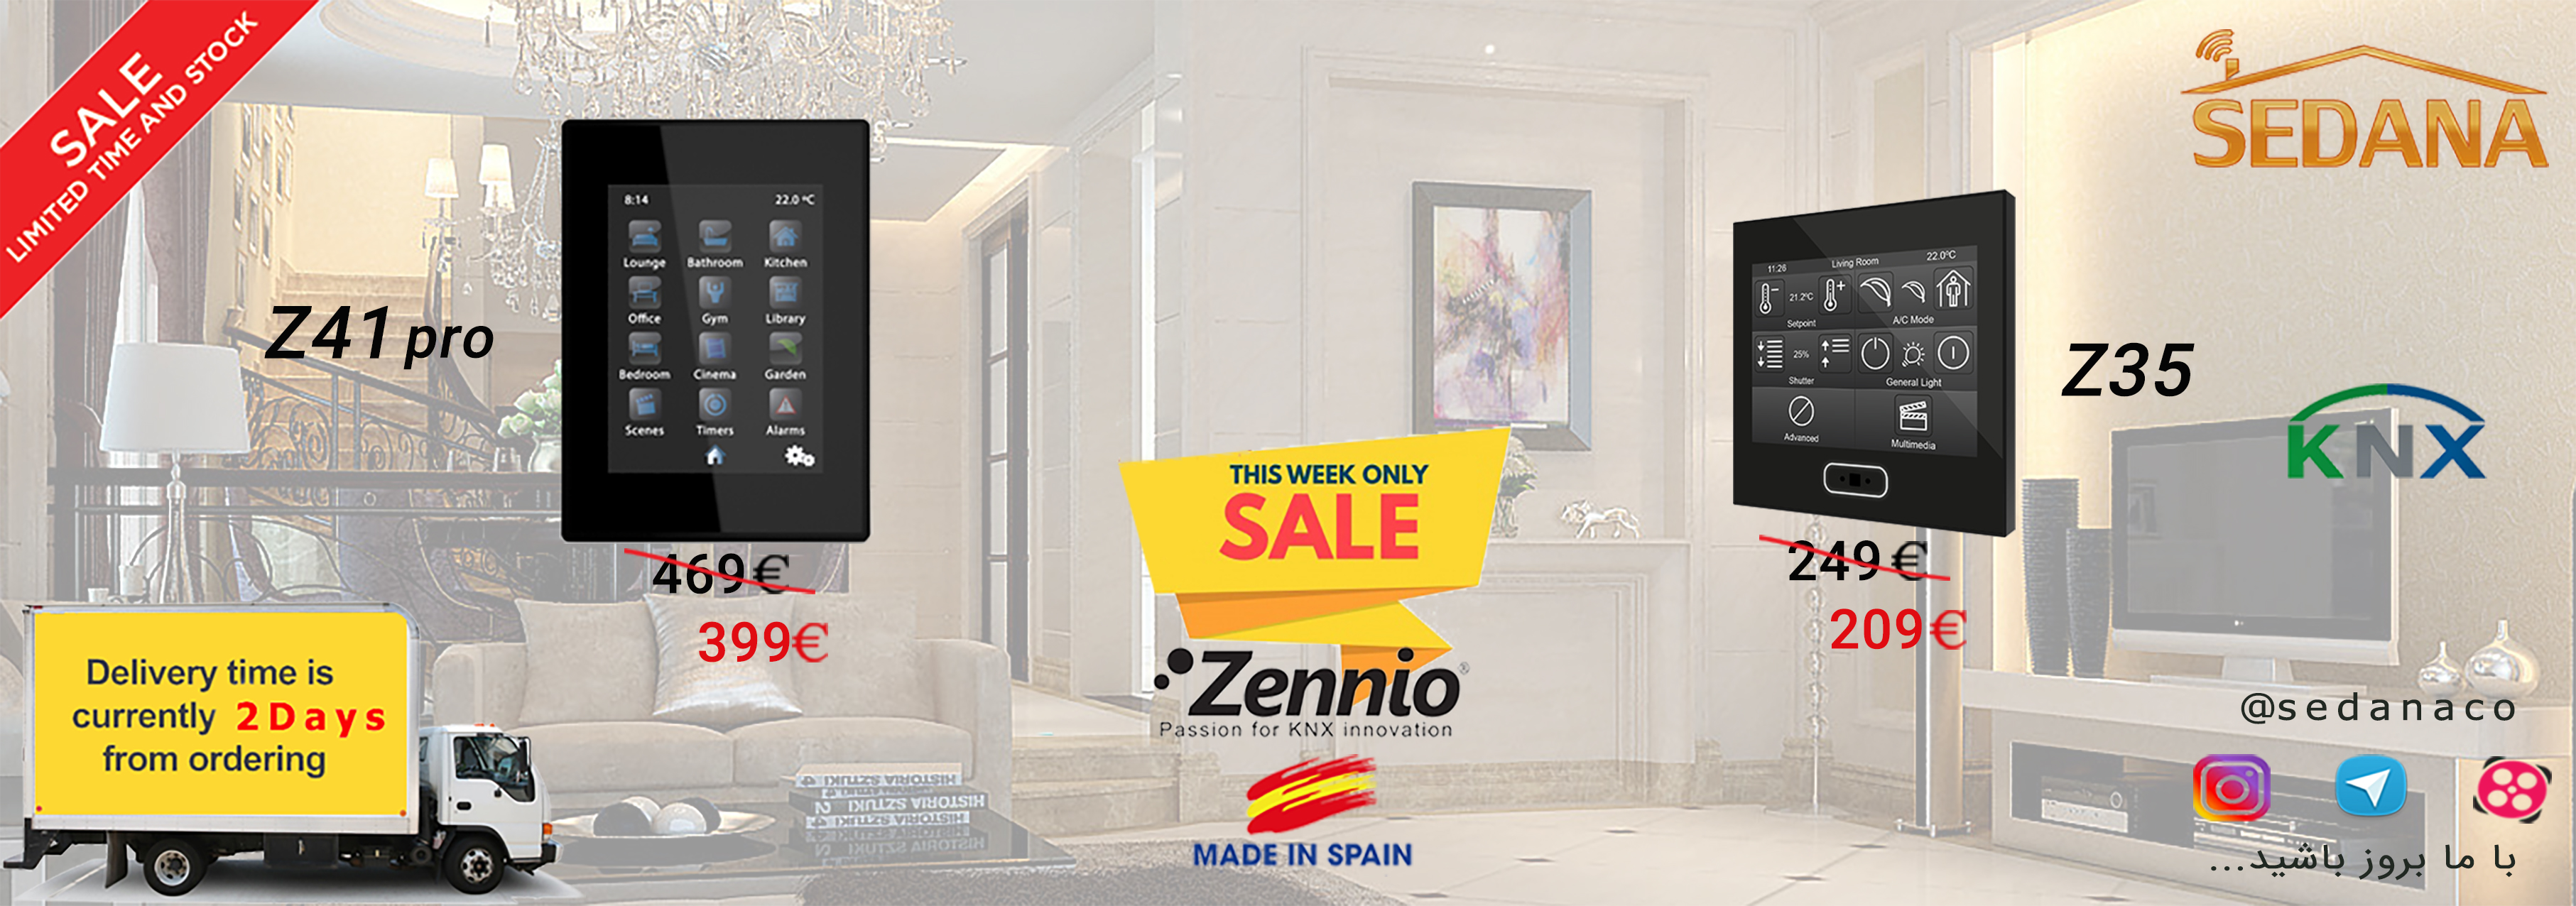 فروش فوق العاده نمایشگر Z41pro و Z35 خانه هوشمند